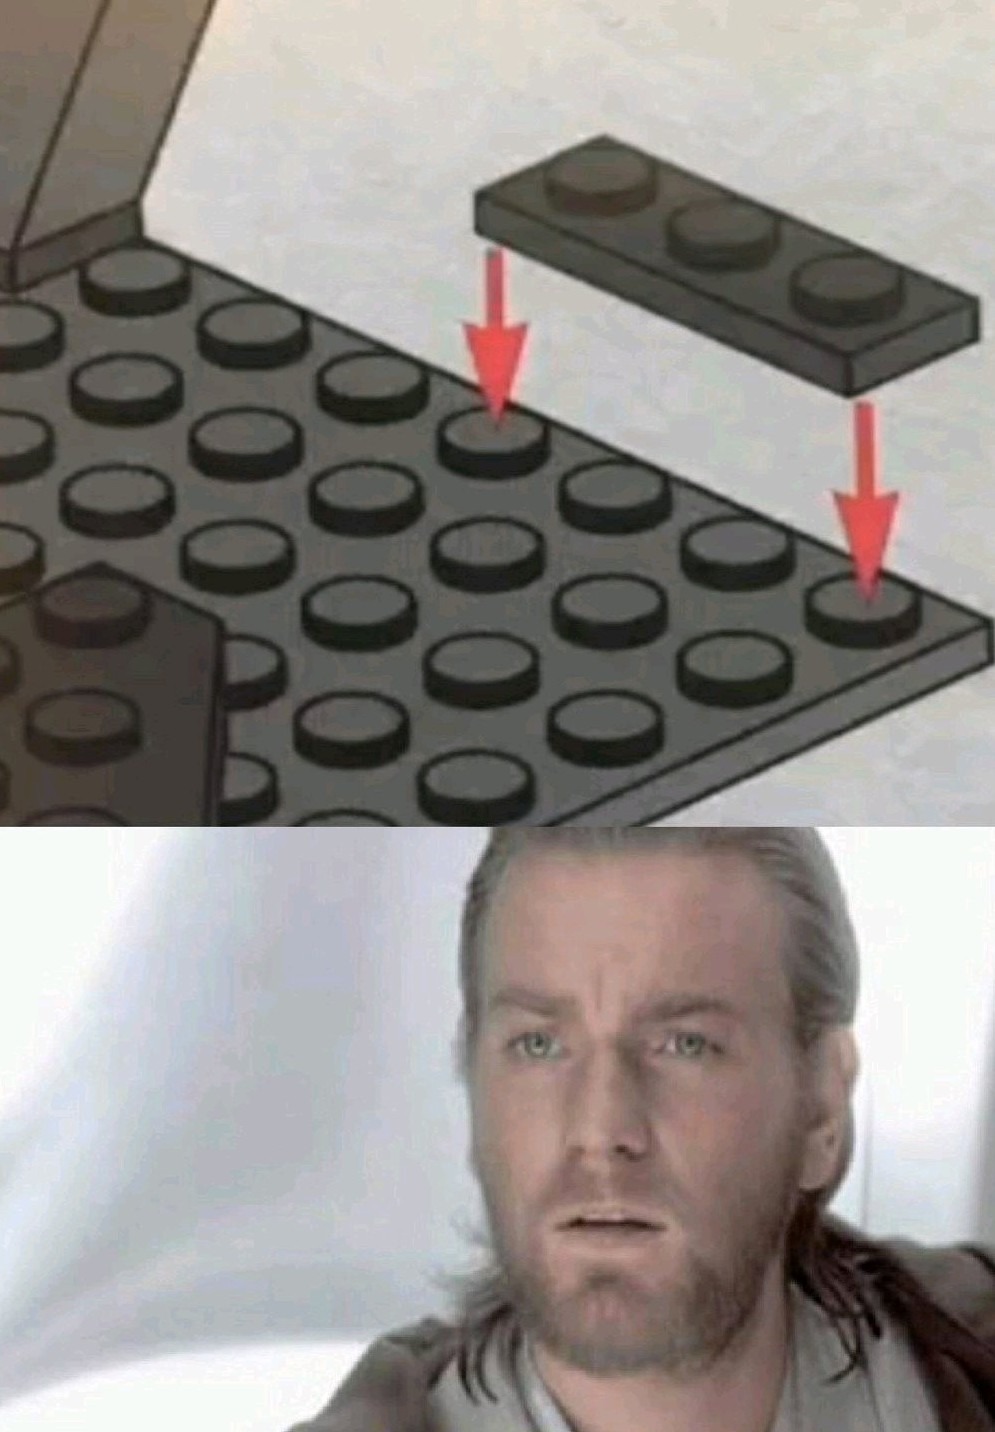 Lego - meme